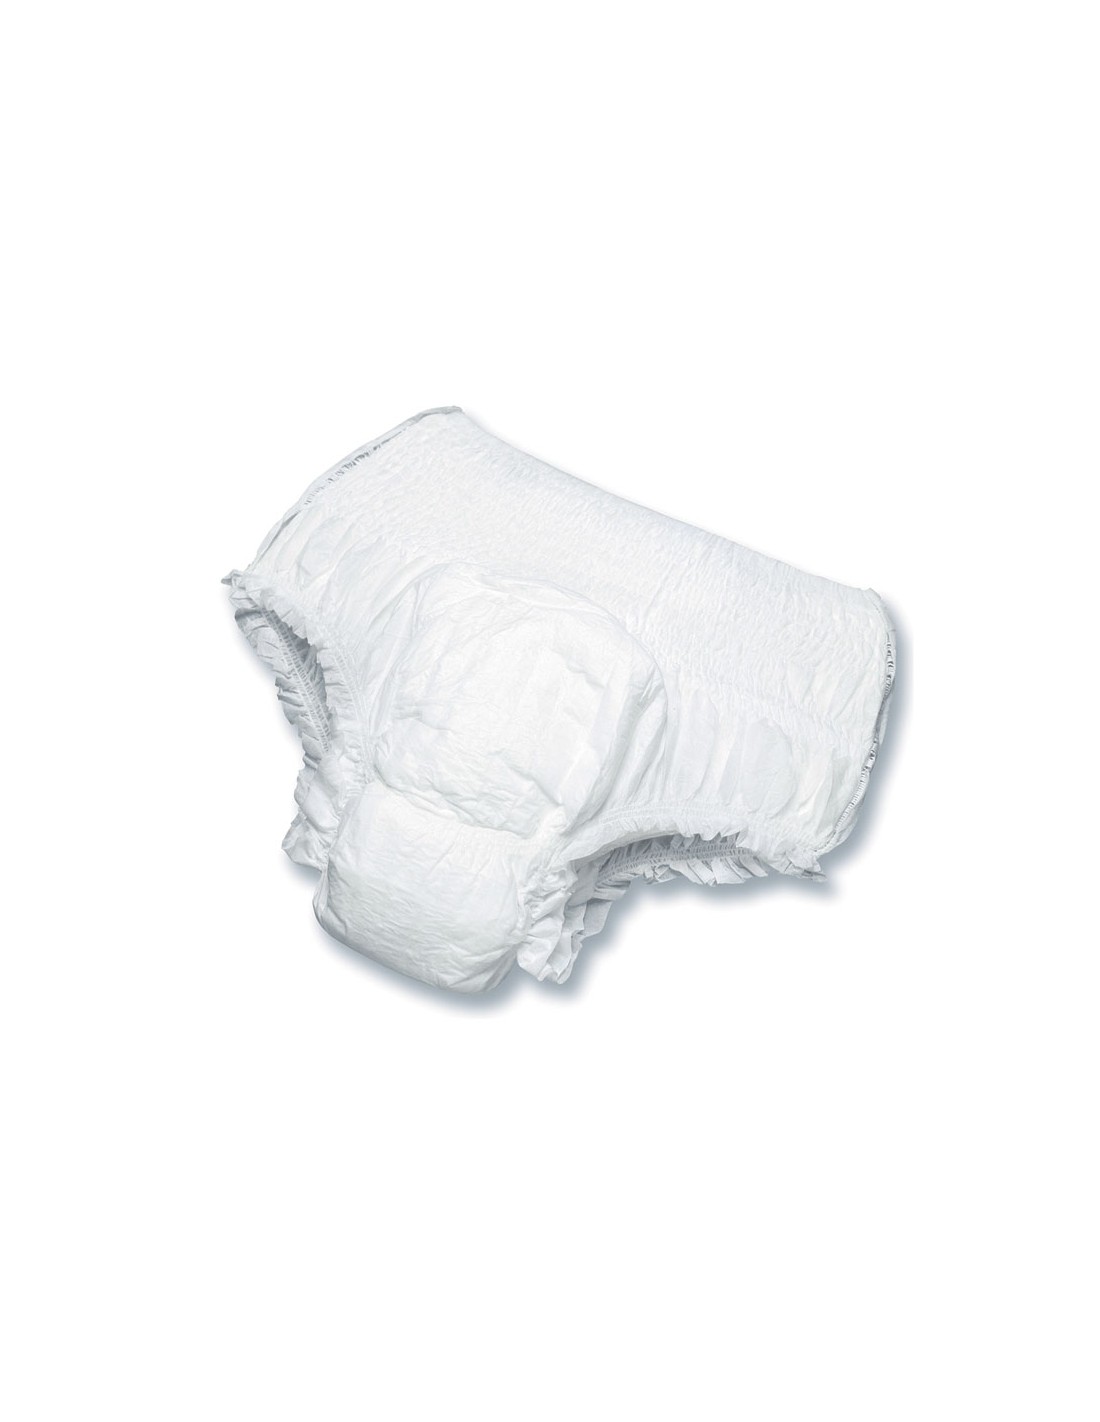 destyer Washable Absorbency Incontinence Aid Cotton Underwear